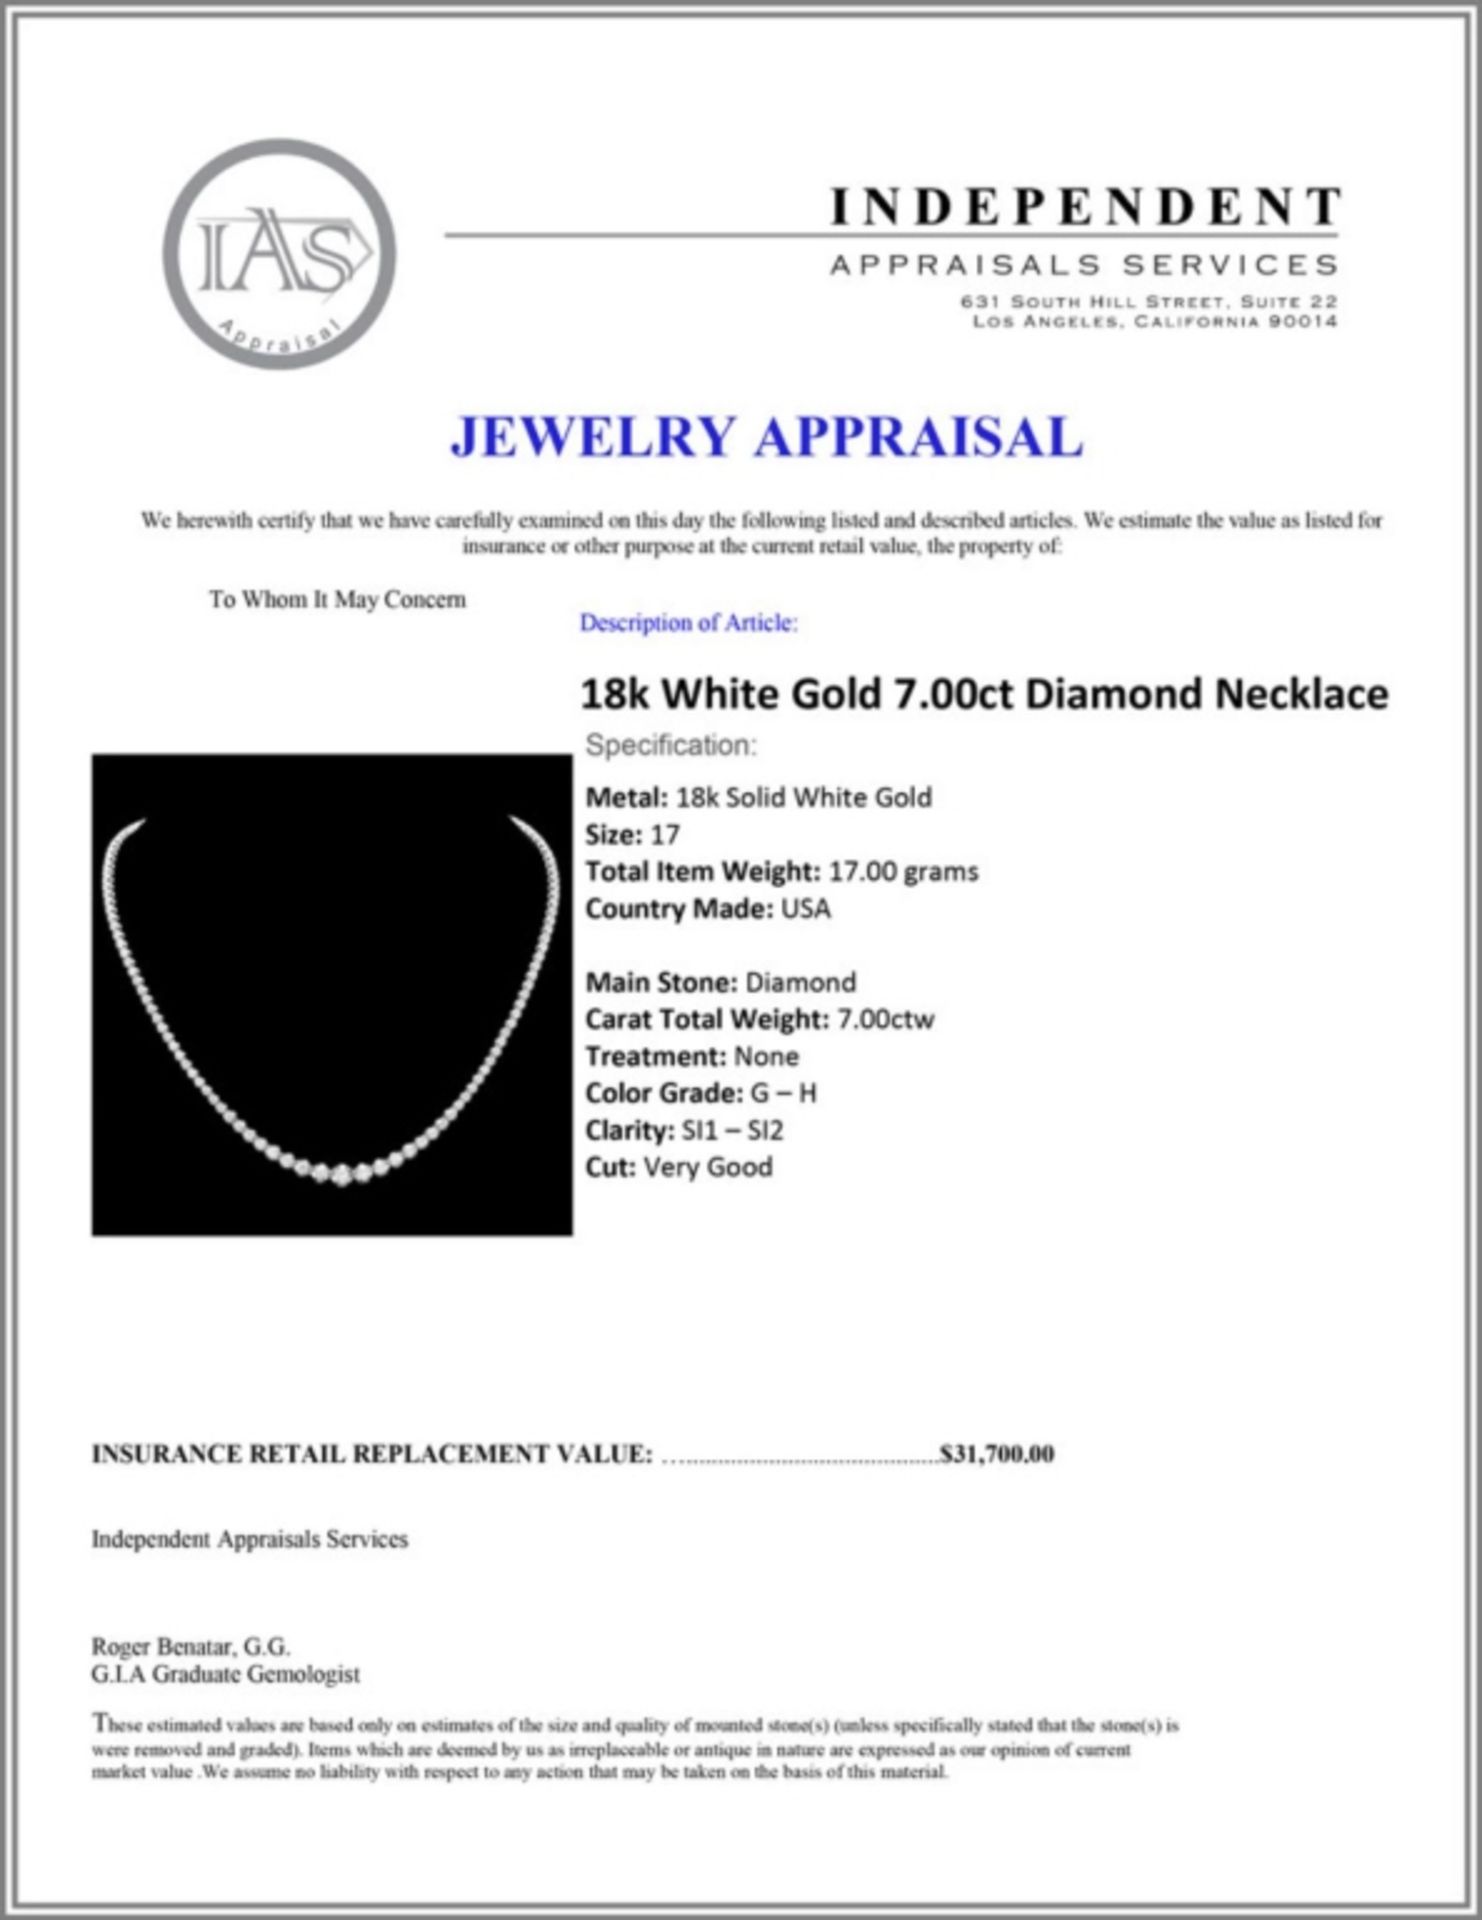 ^18k White Gold 7.00ct Diamond Necklace - Image 3 of 3